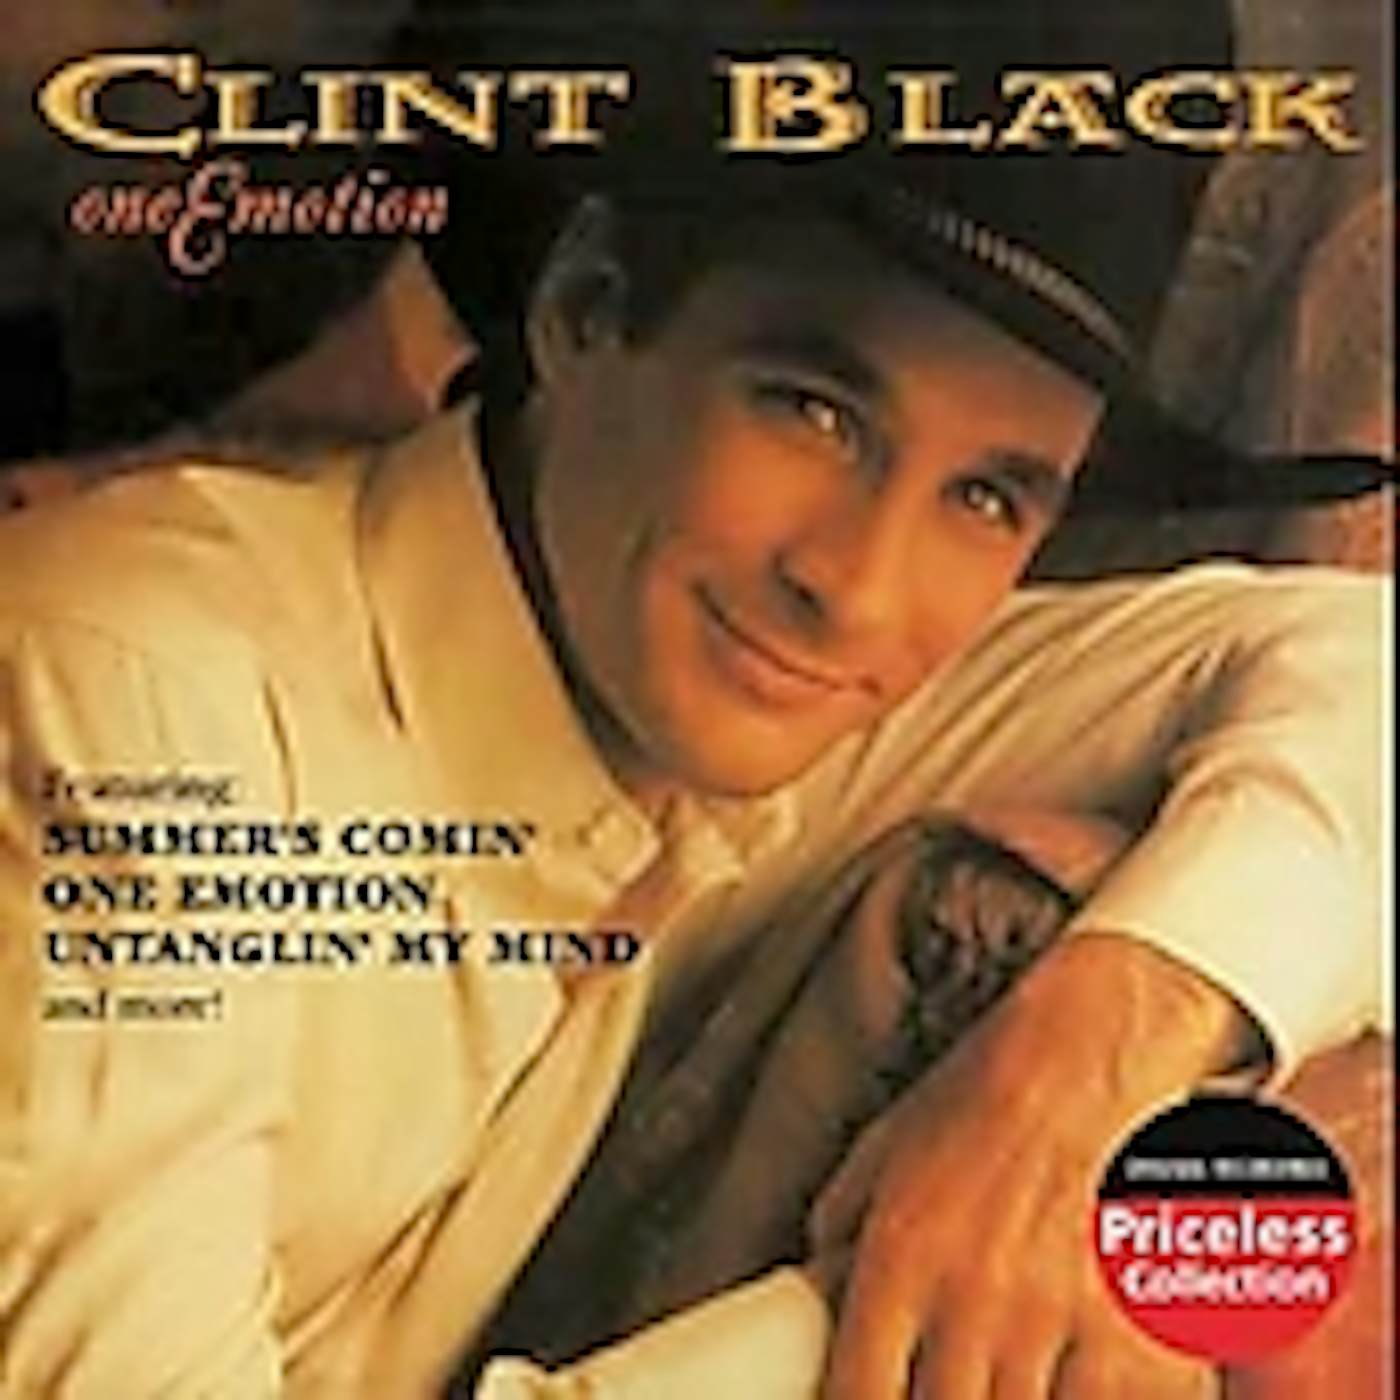 Clint Black ONE EMOTION CD